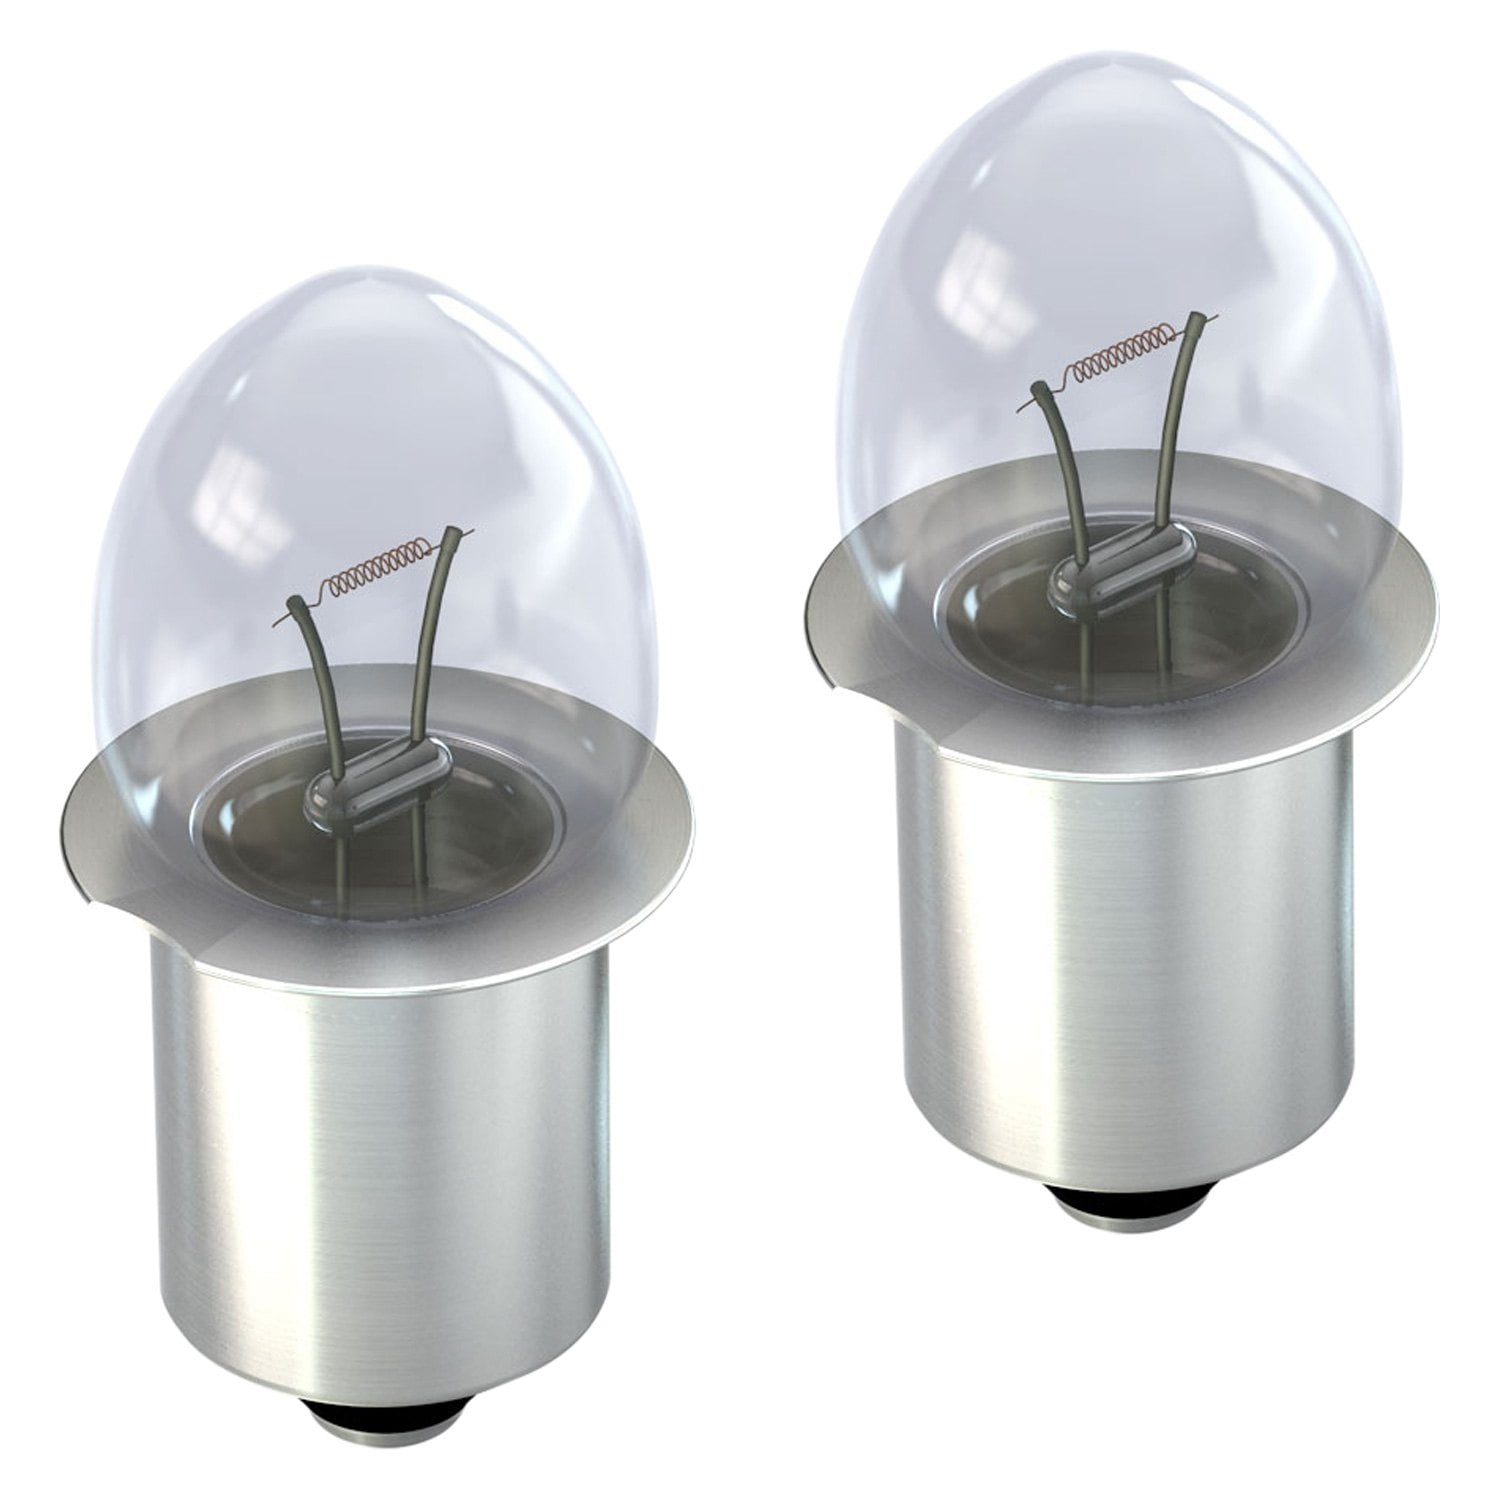 Kpr113 Rayovac Bulbs 6v Lanterns 3.6 Watt for sale online K13 